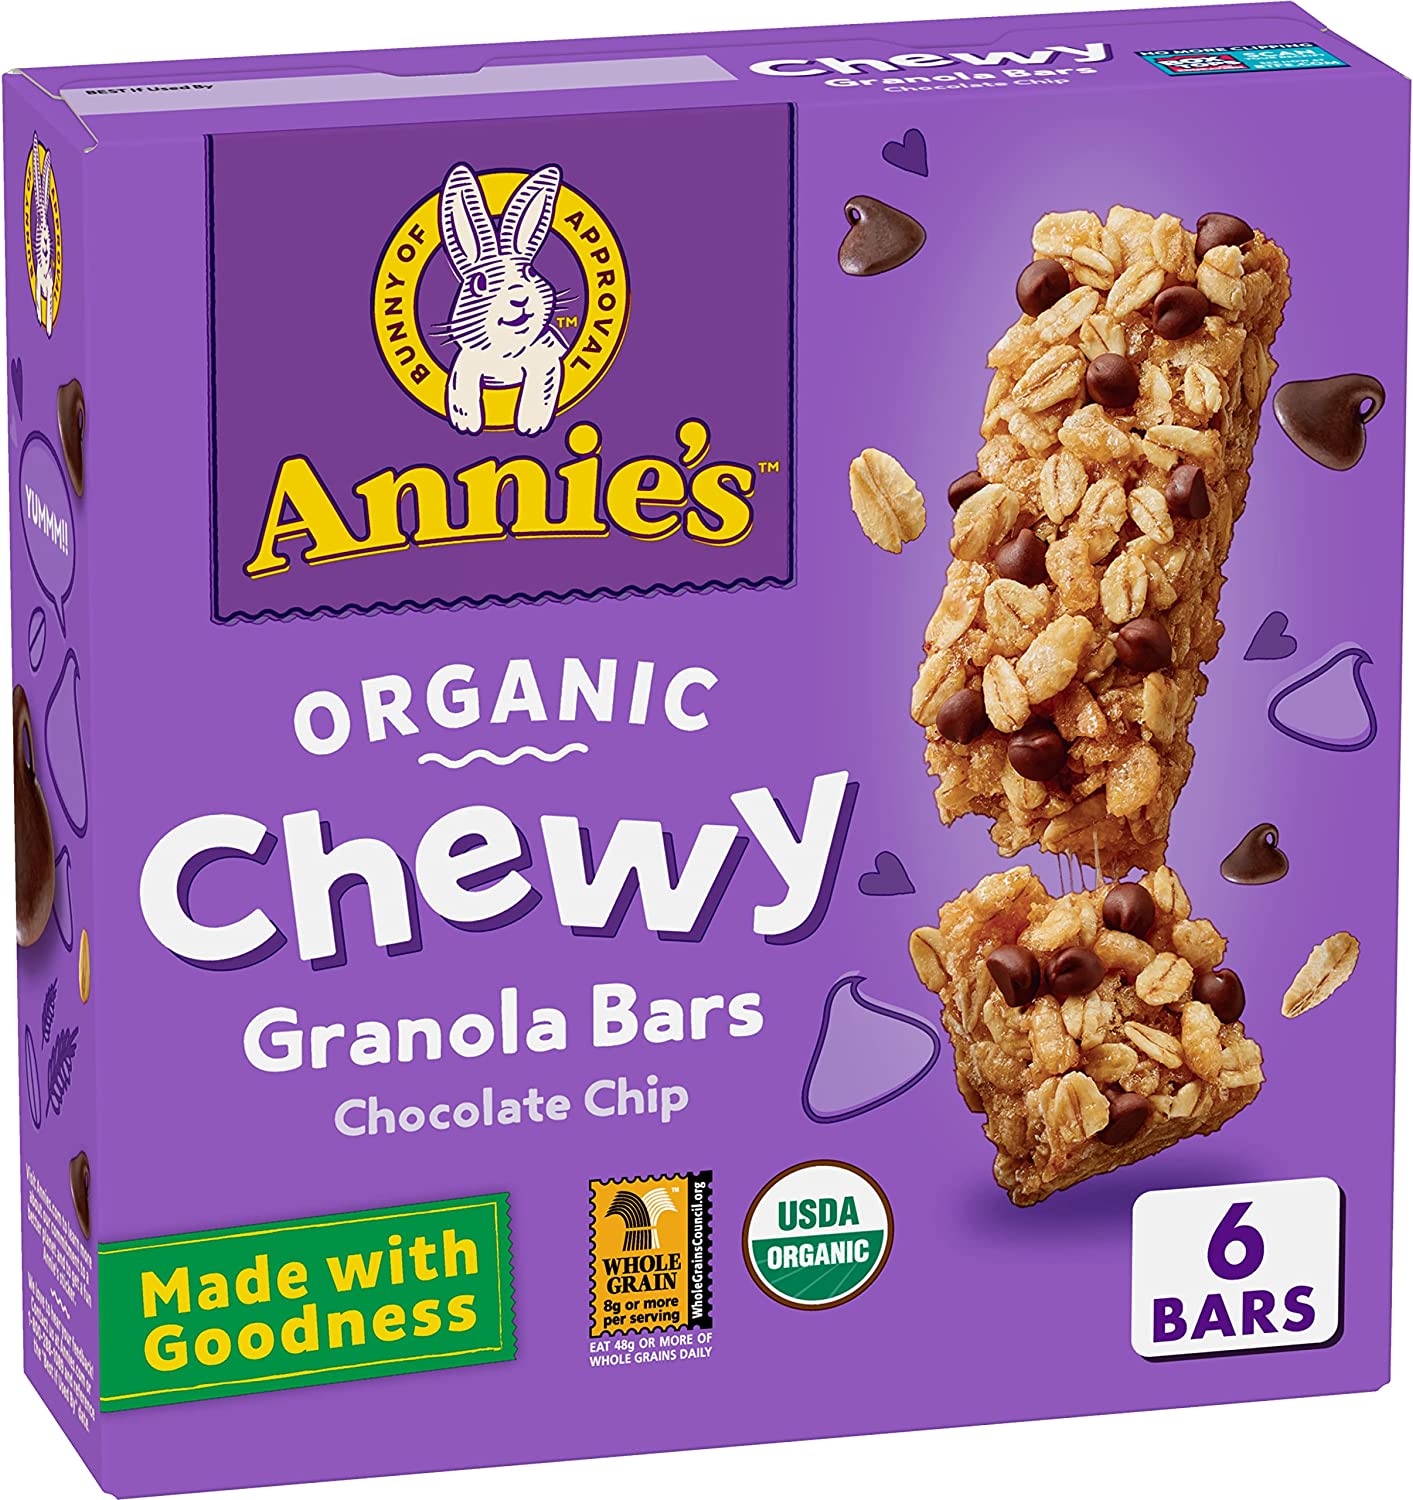 Annie’s Organic Chewy Granola Bars, Chocolate Chip, 6 Bars, 5.34 oz.